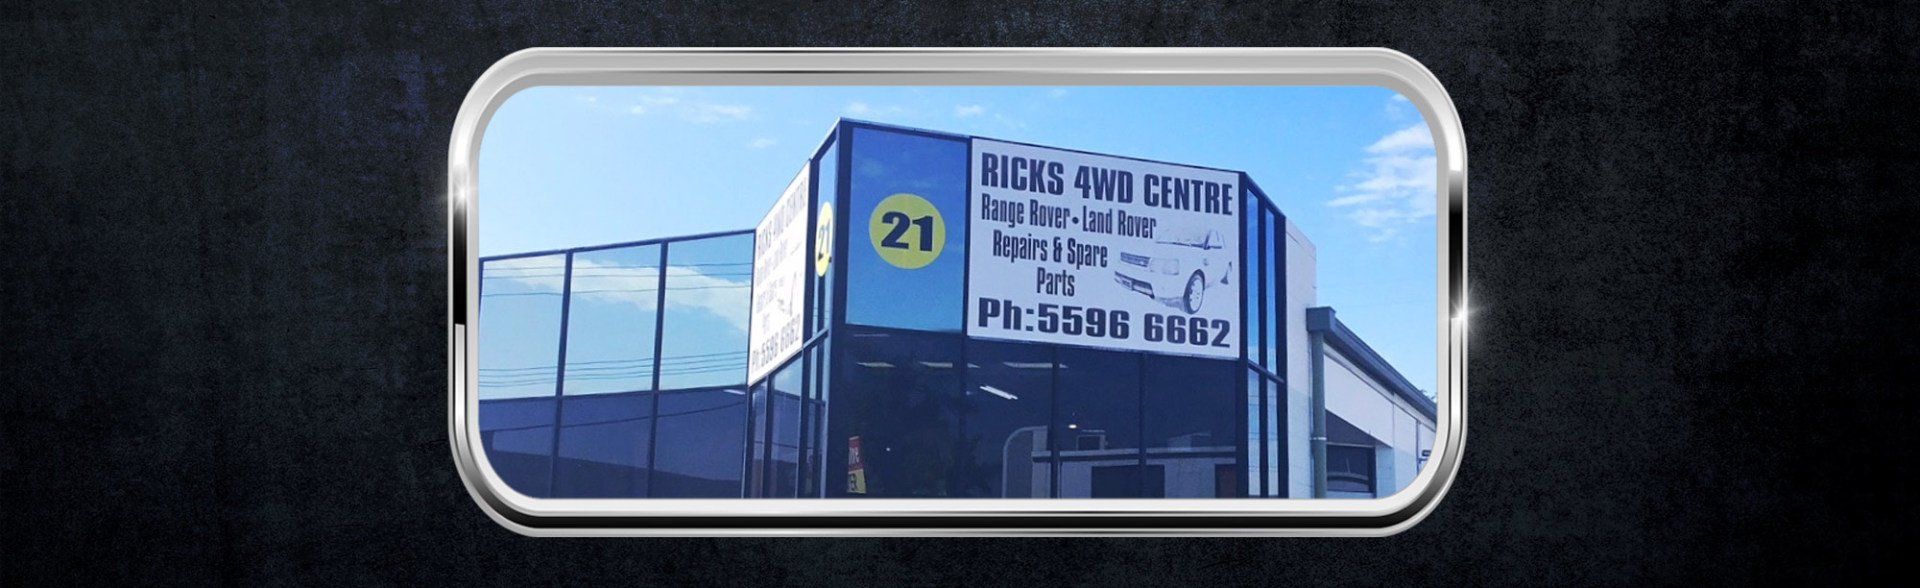 Ricks 4WD Centre Building